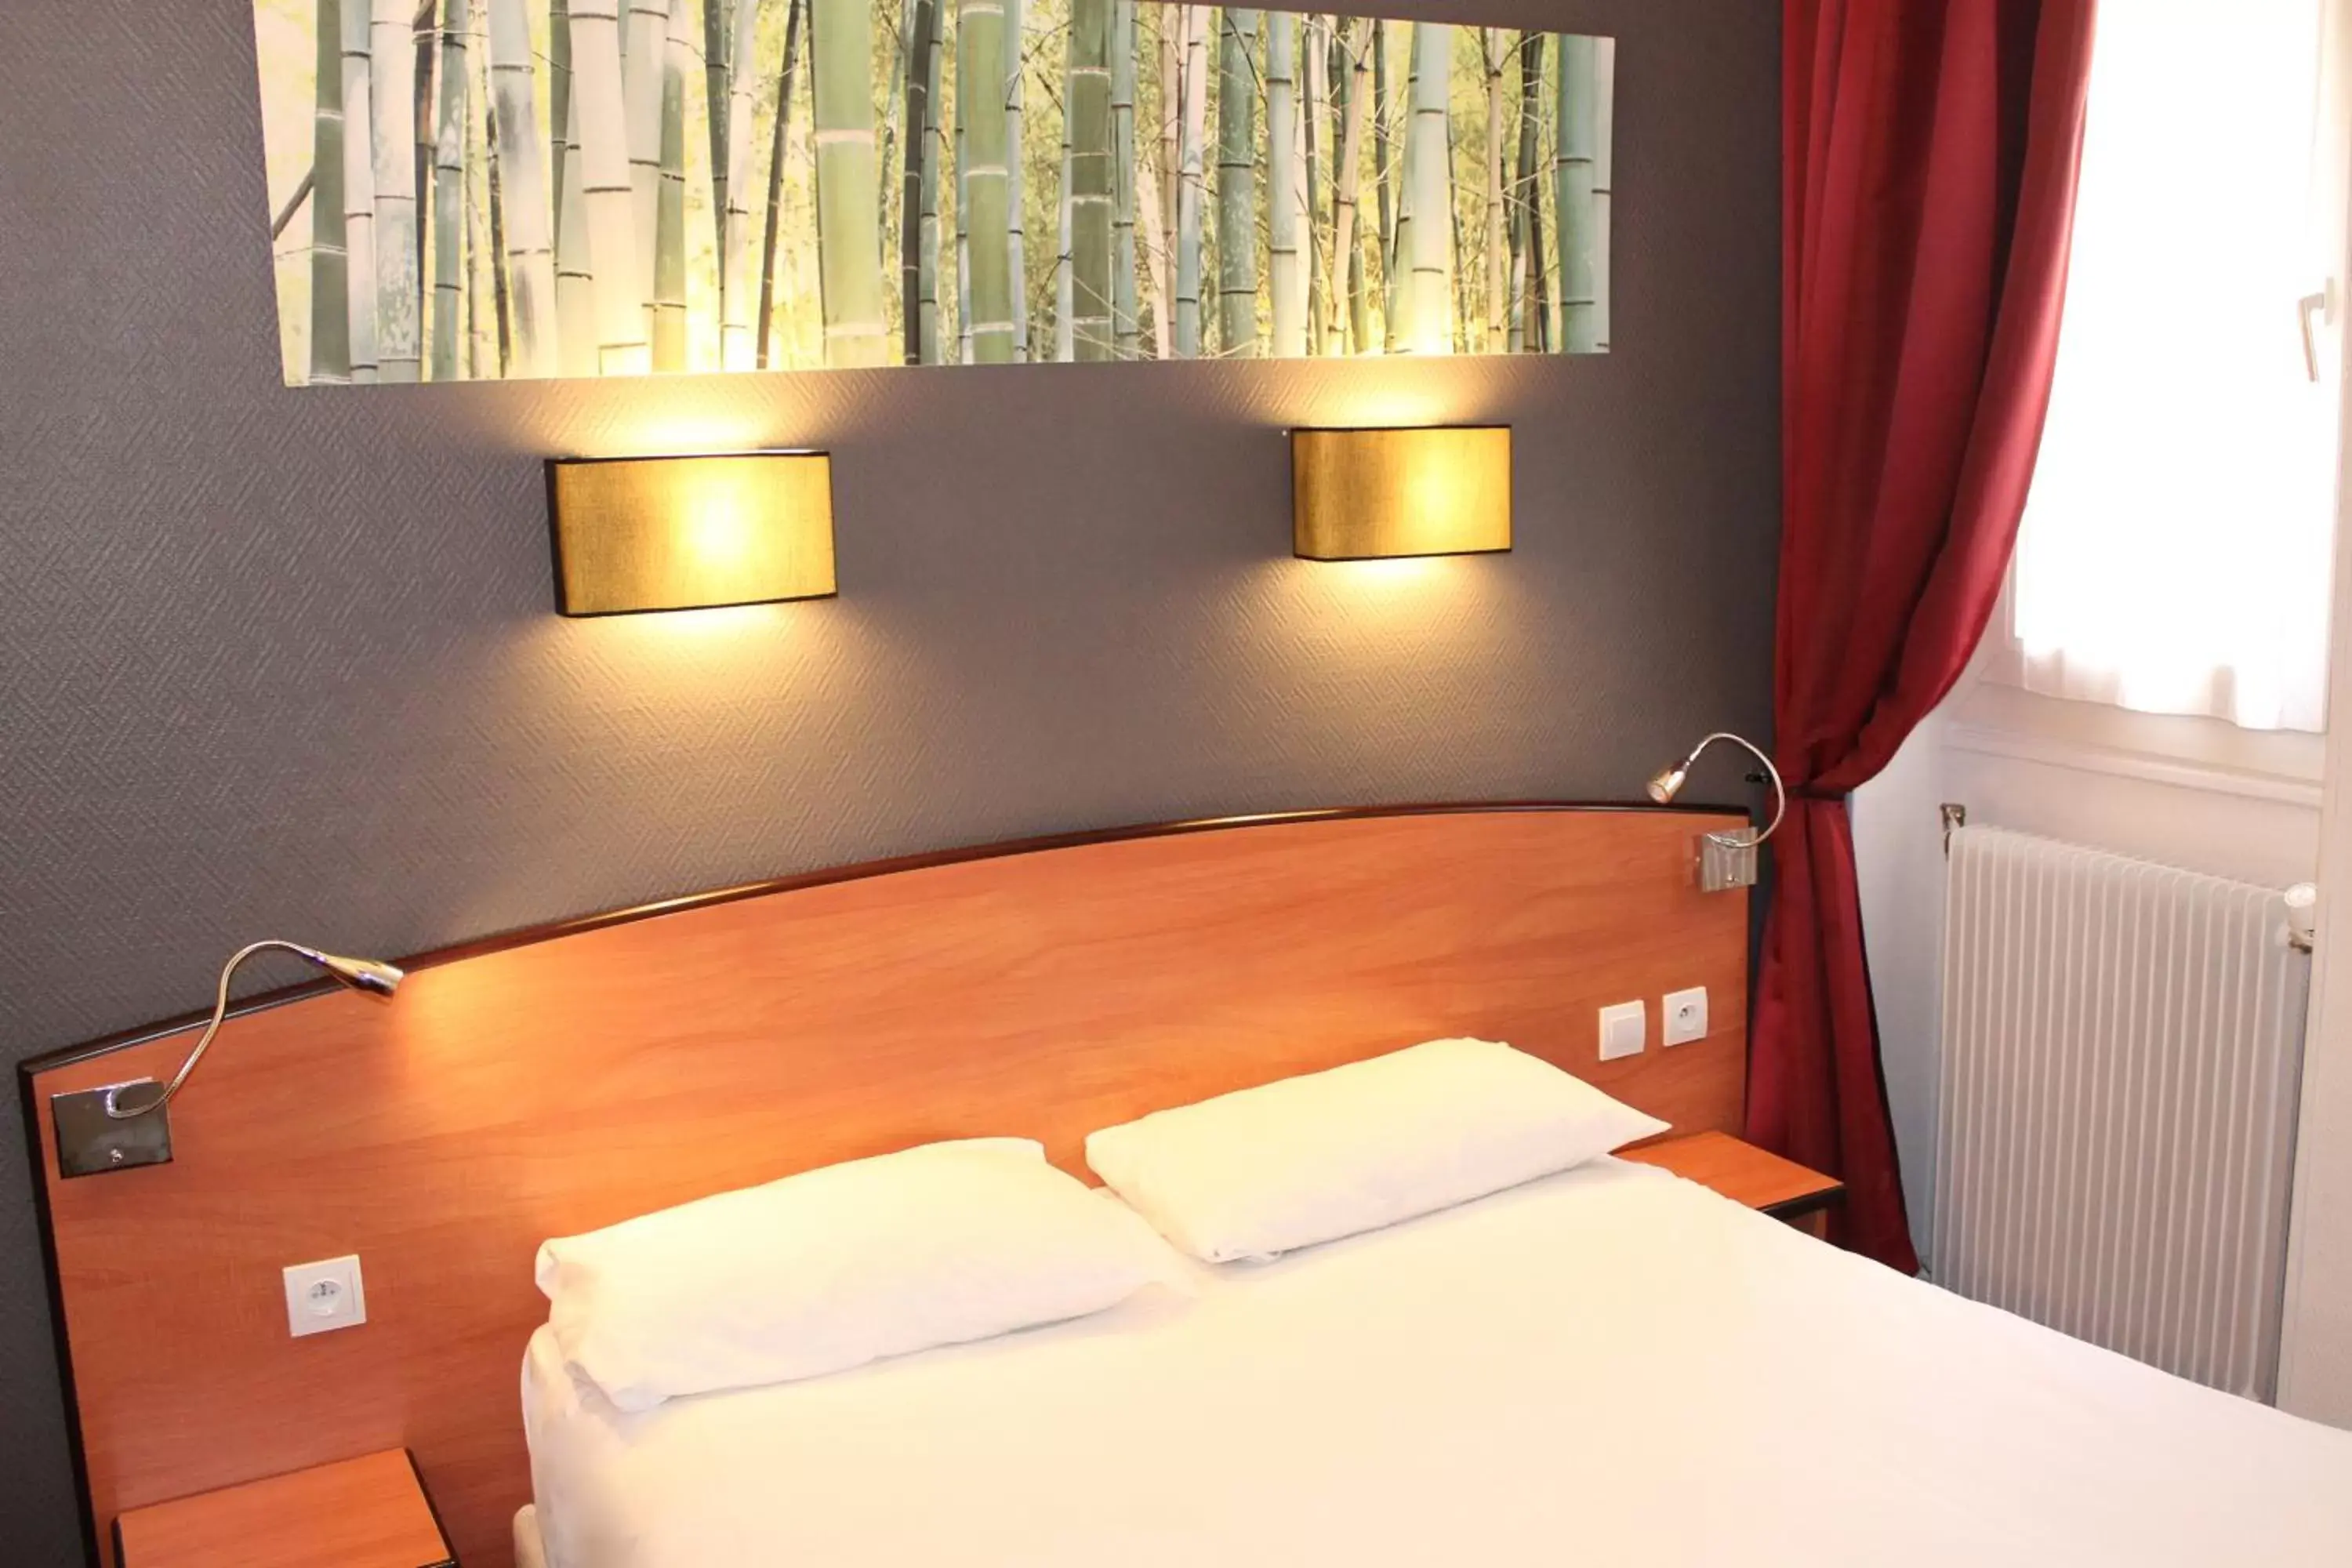 Bed in Kyriad Hotel XIII Italie Gobelins